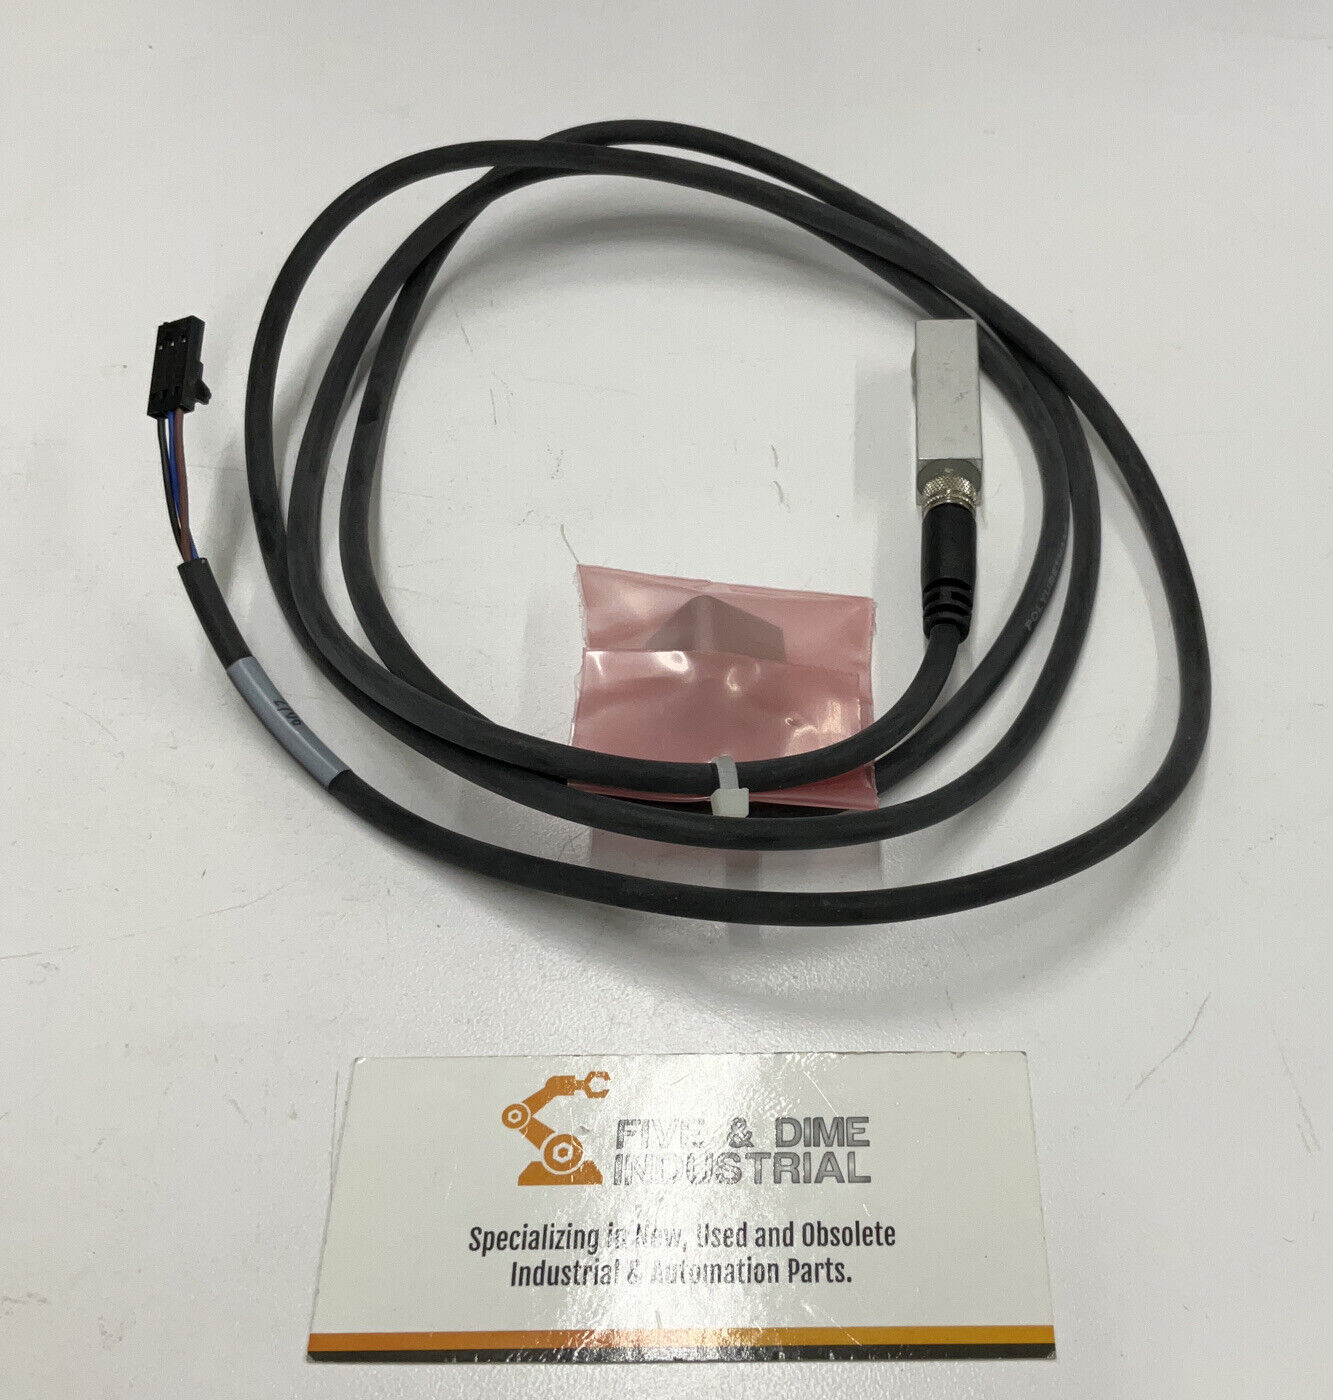 Origa 47081701 Type IS Proximity Sensor 10-30VDC w/ Bracket & Cable (BL190) - 0